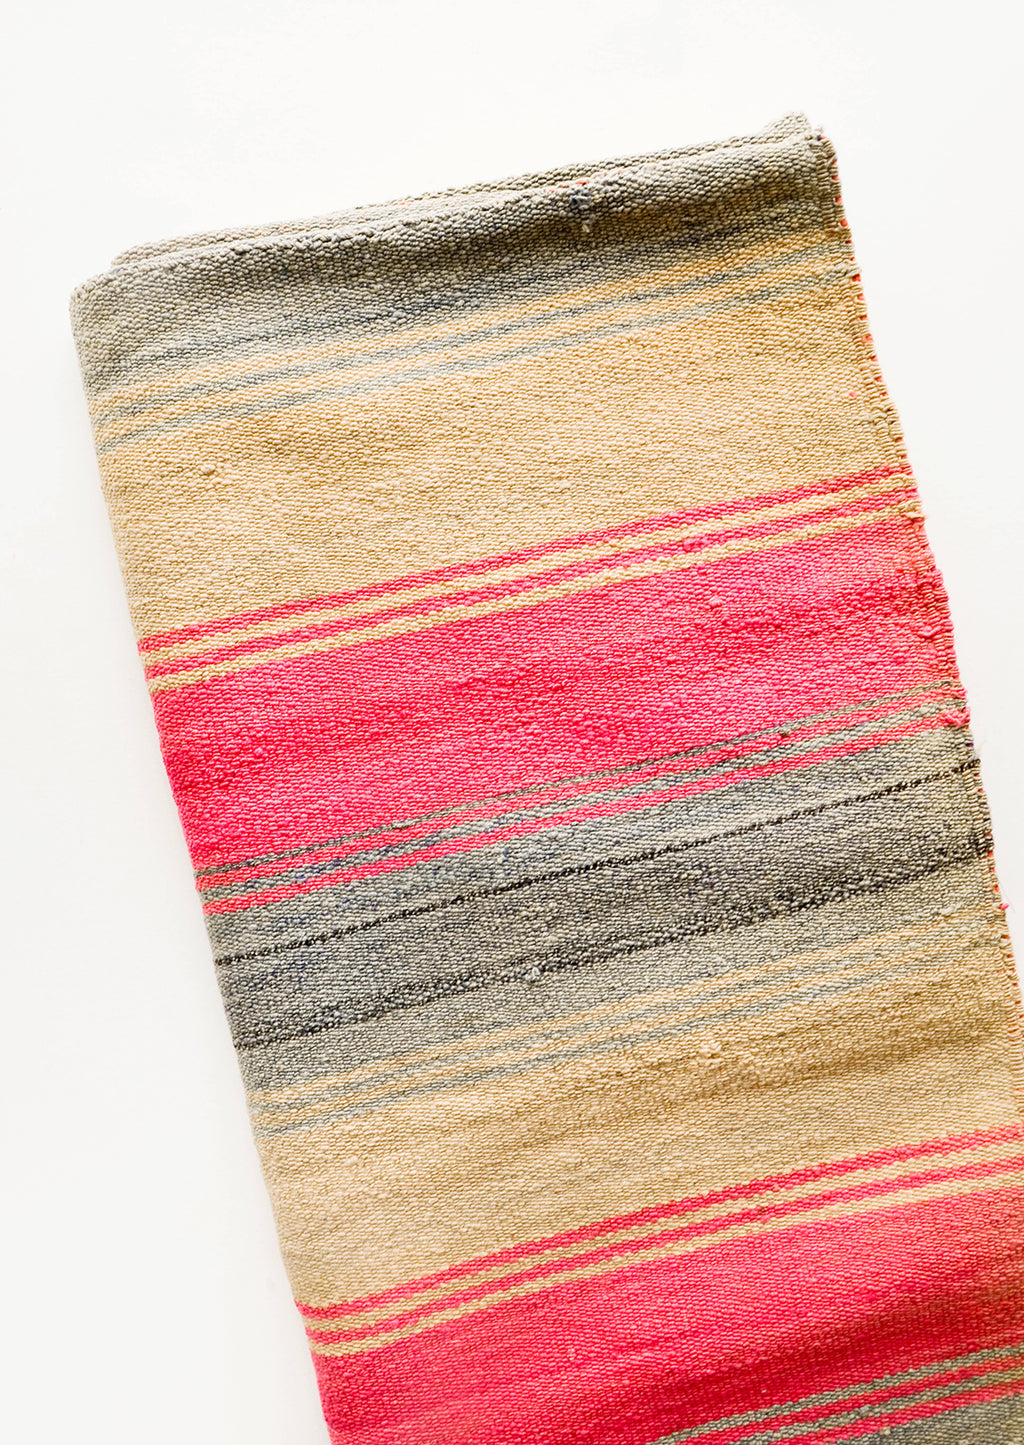 2: Vintage wool textile in tan, pink & mint striped pattern